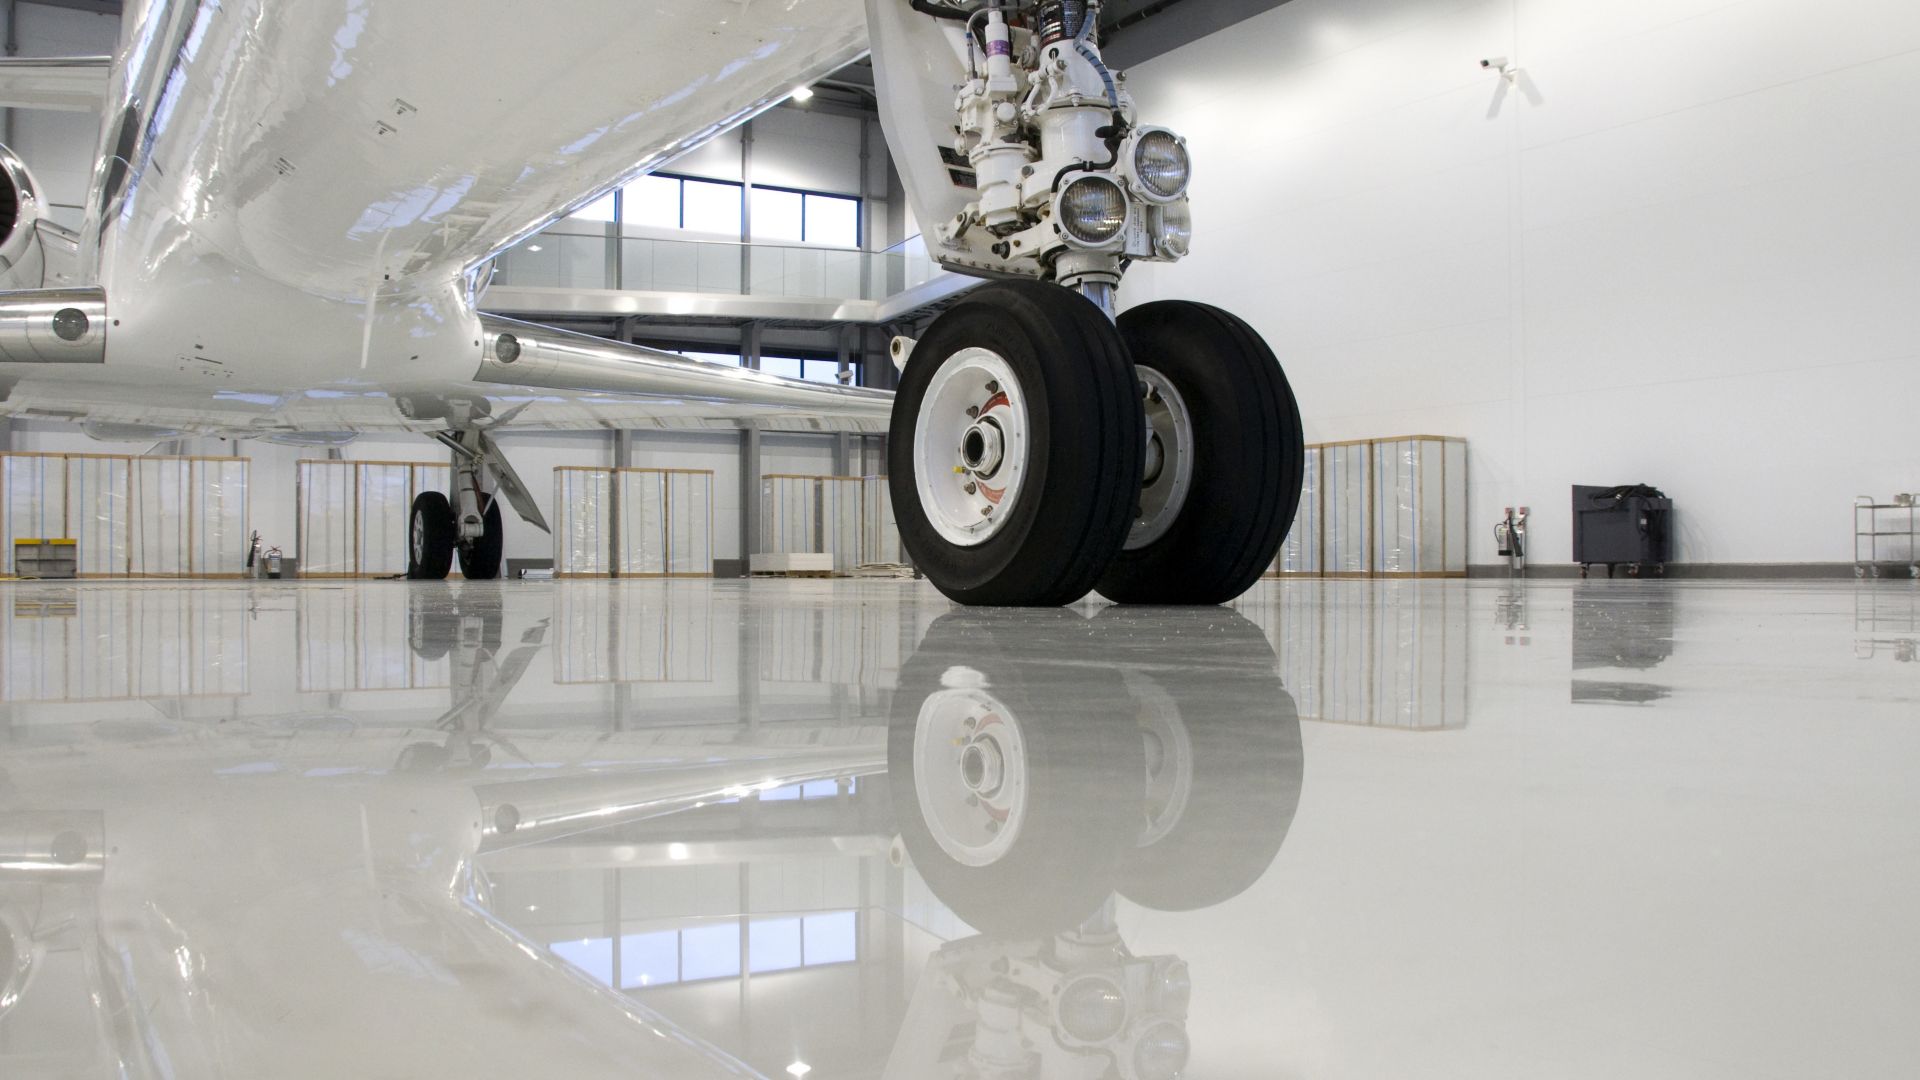 Airplane inside an airport hangar